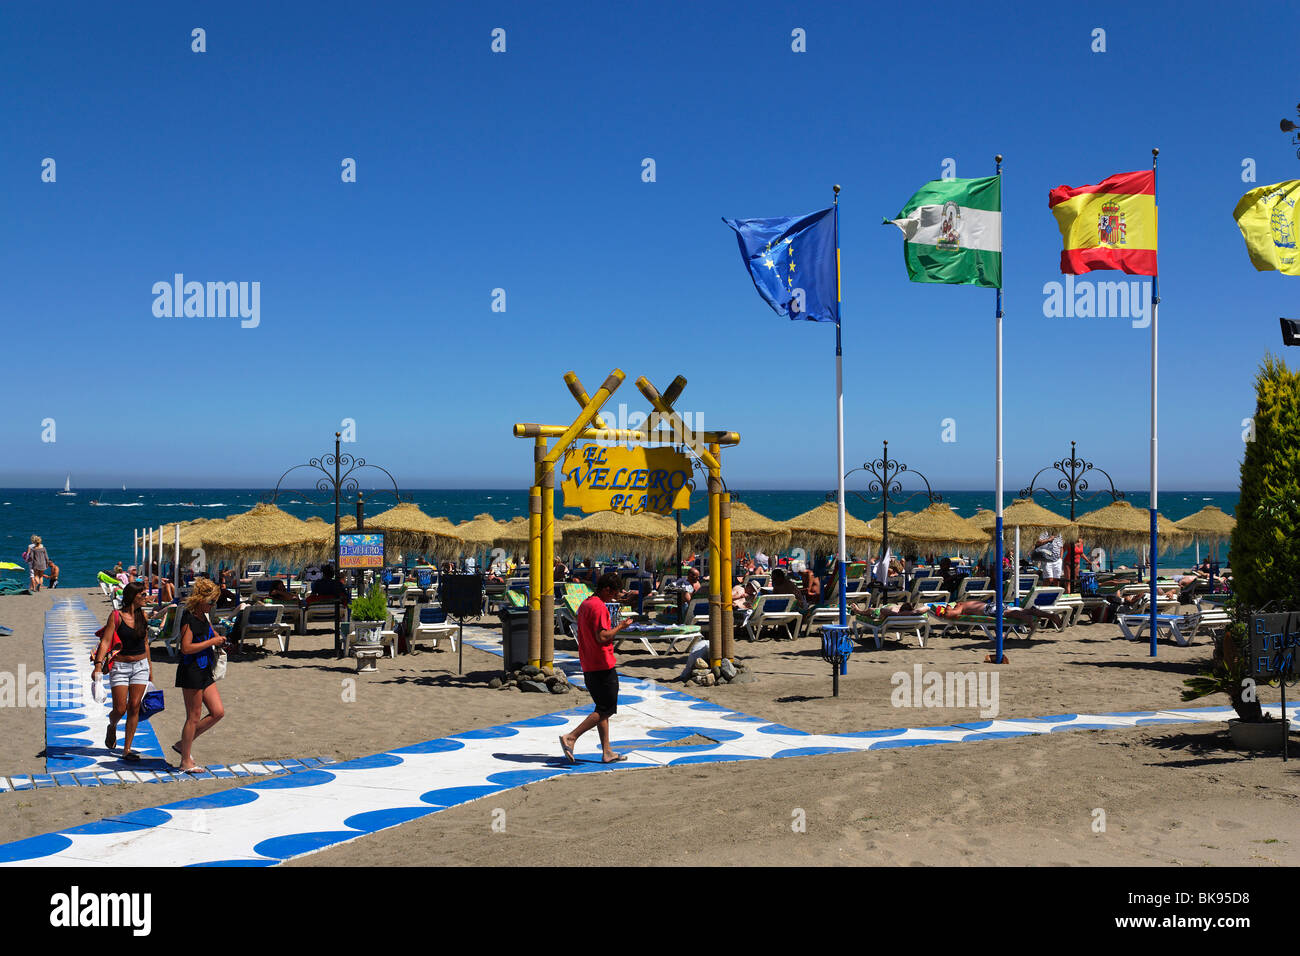 Beach bar, Torremolinos, Andalusia, Spain Stock Photo